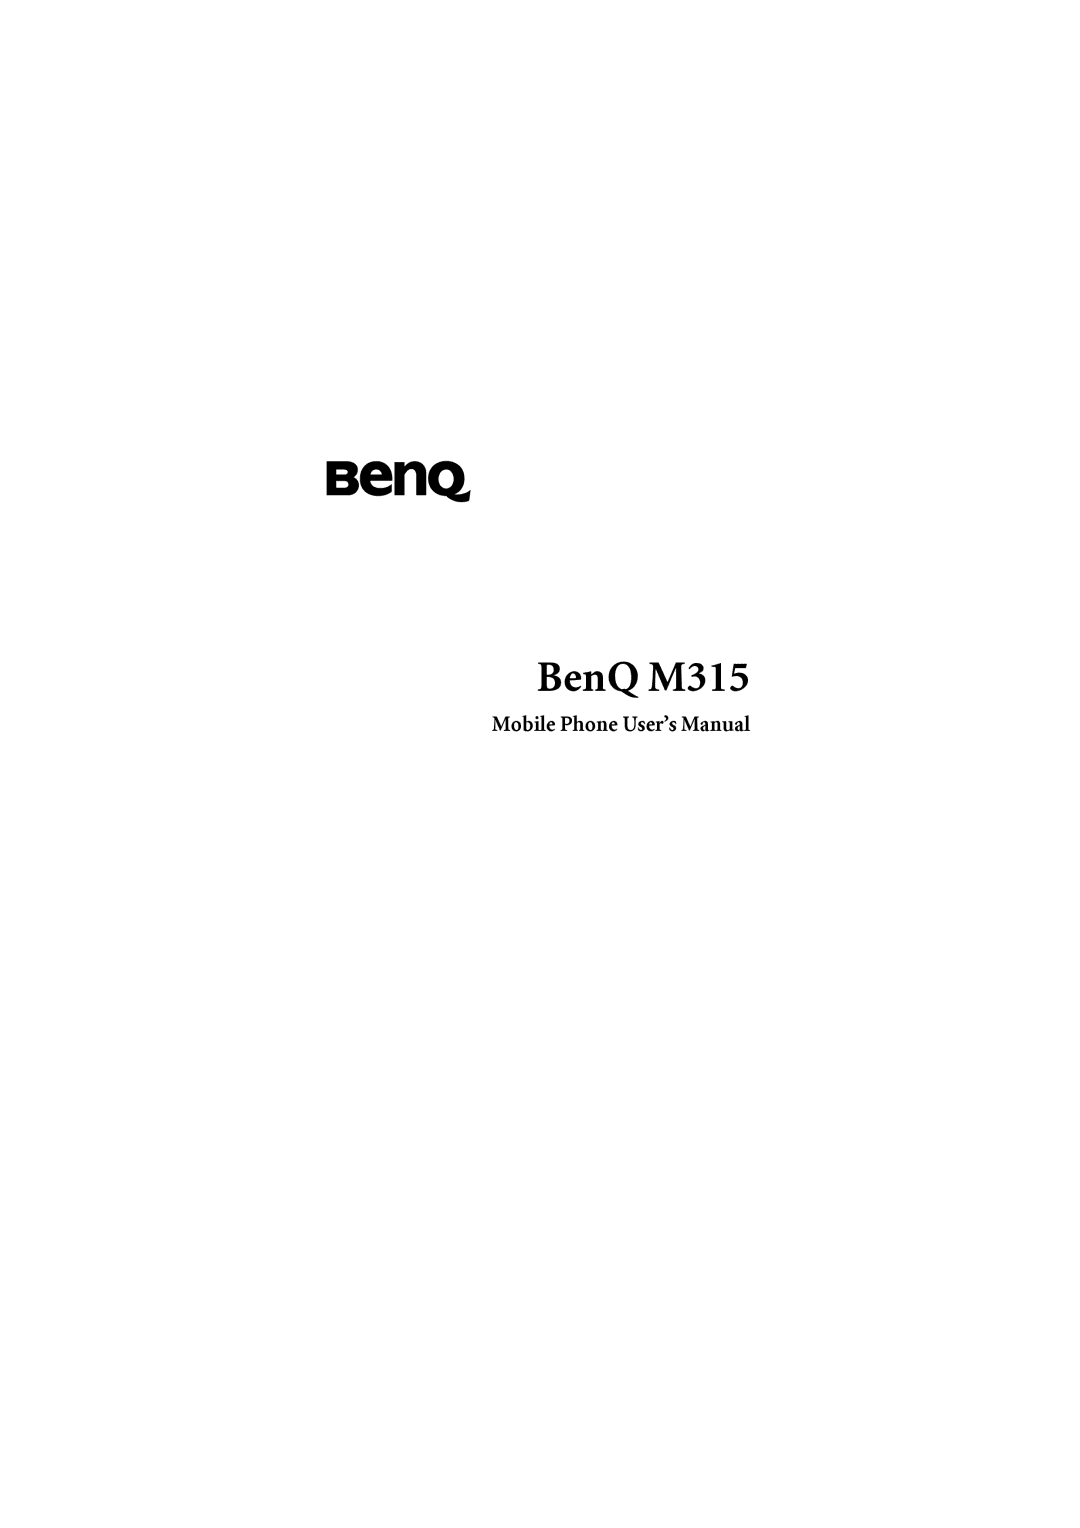 BenQ user manual BenQ M315, Mobile Phone User’s Manual 